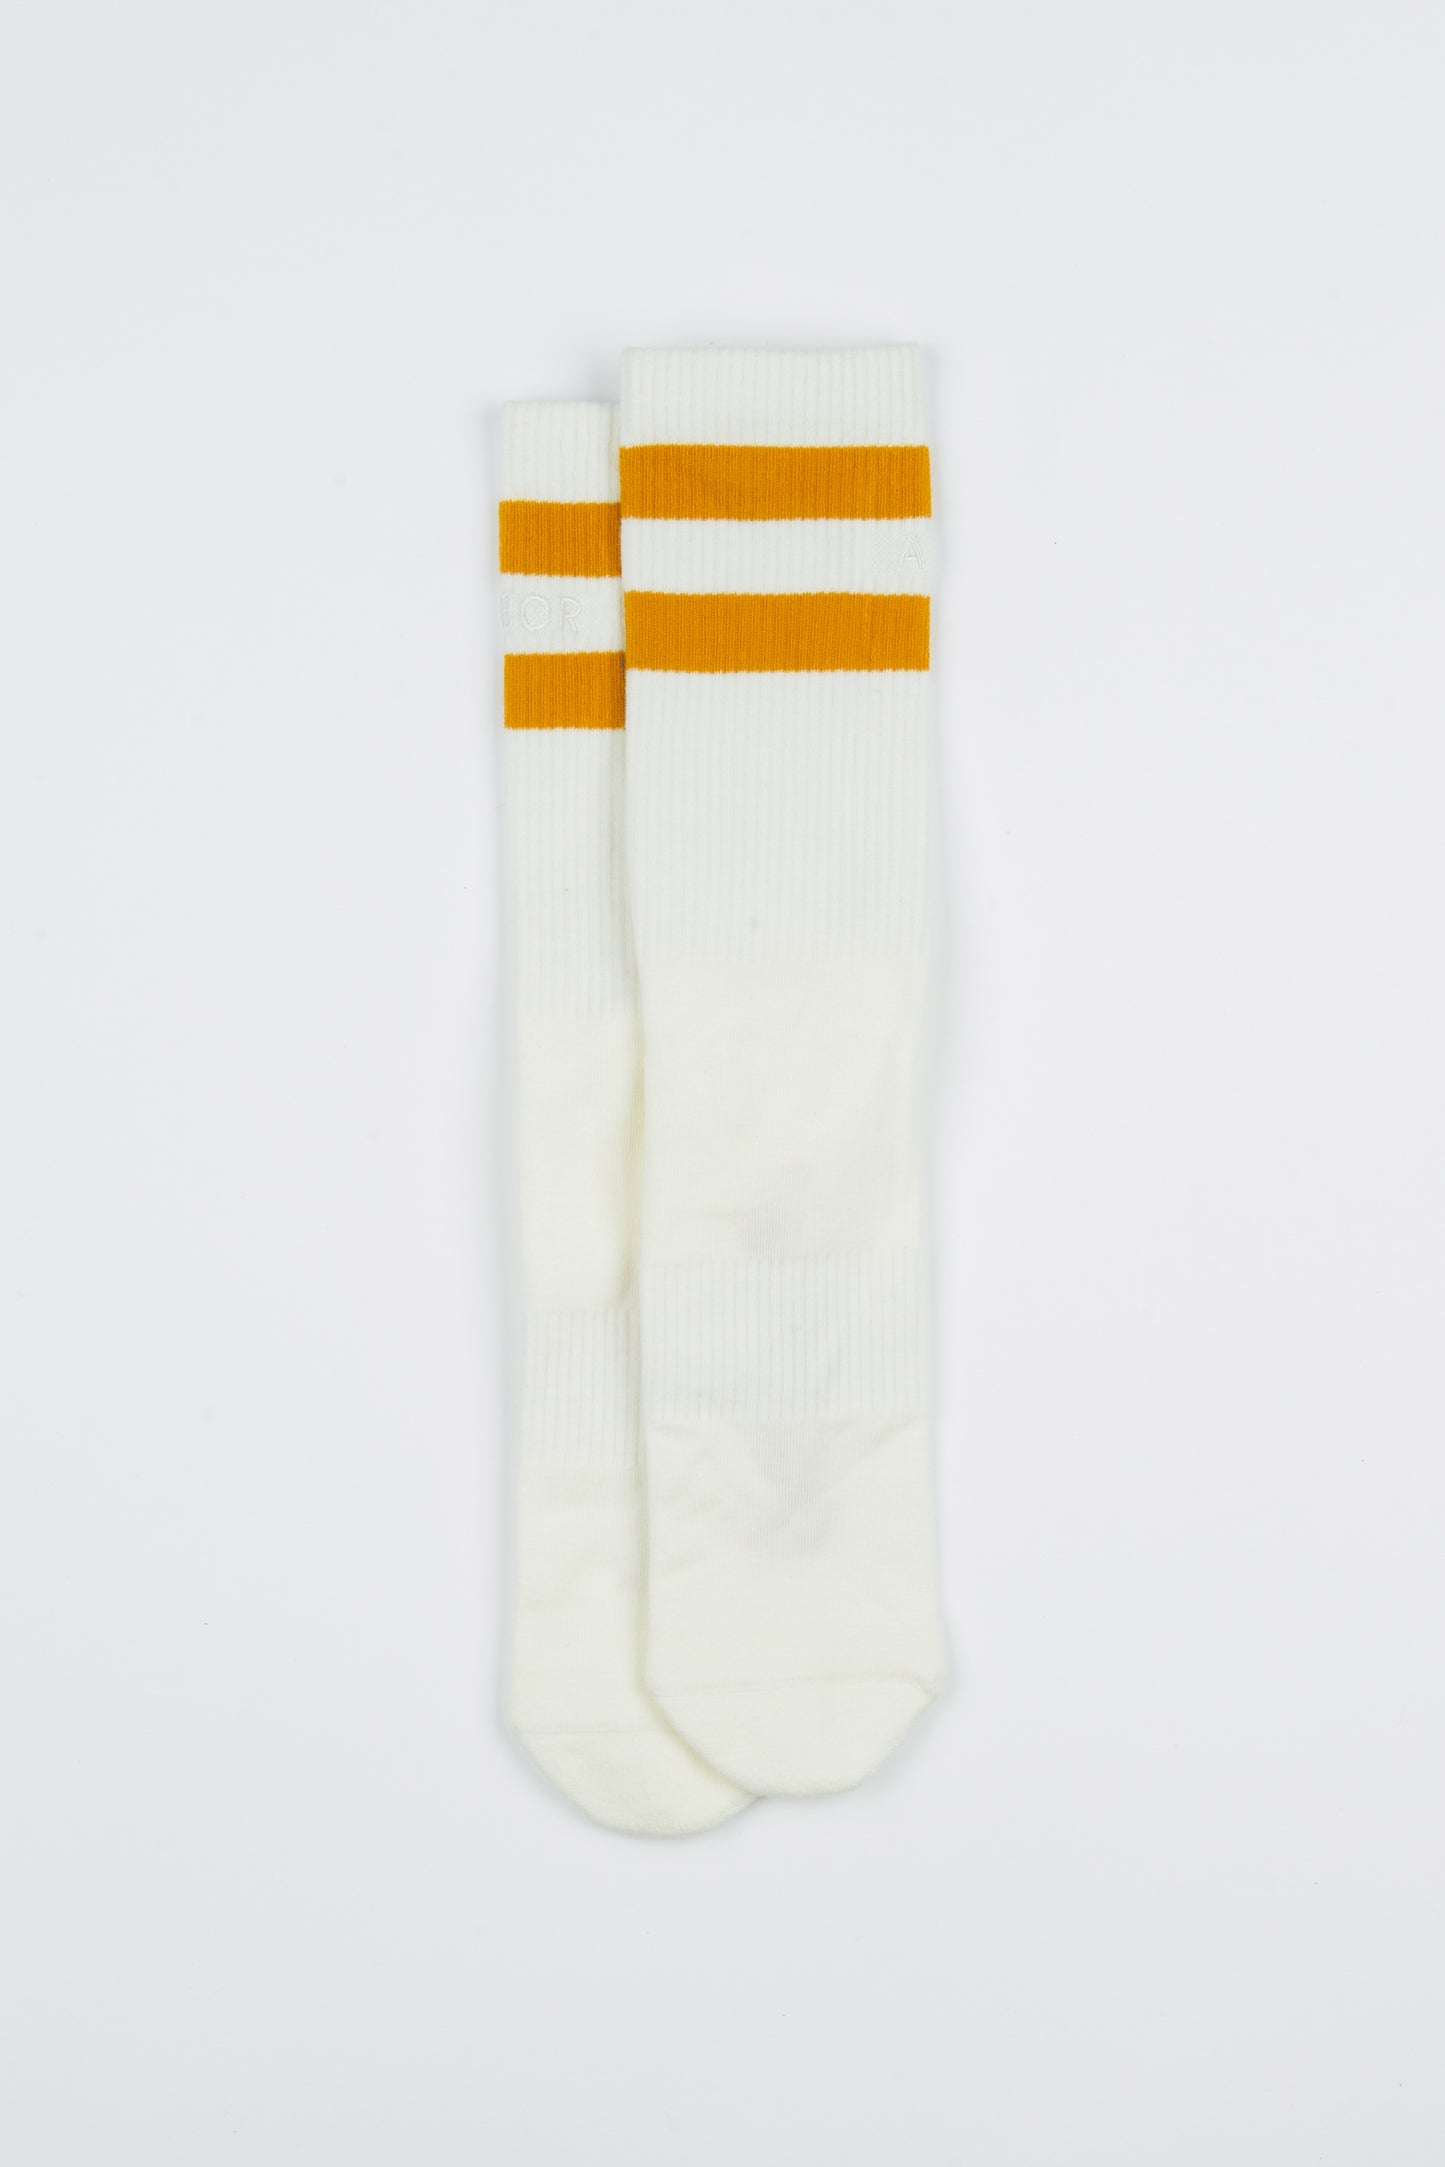 Good Times Vintage Stripes Socks - Mustard